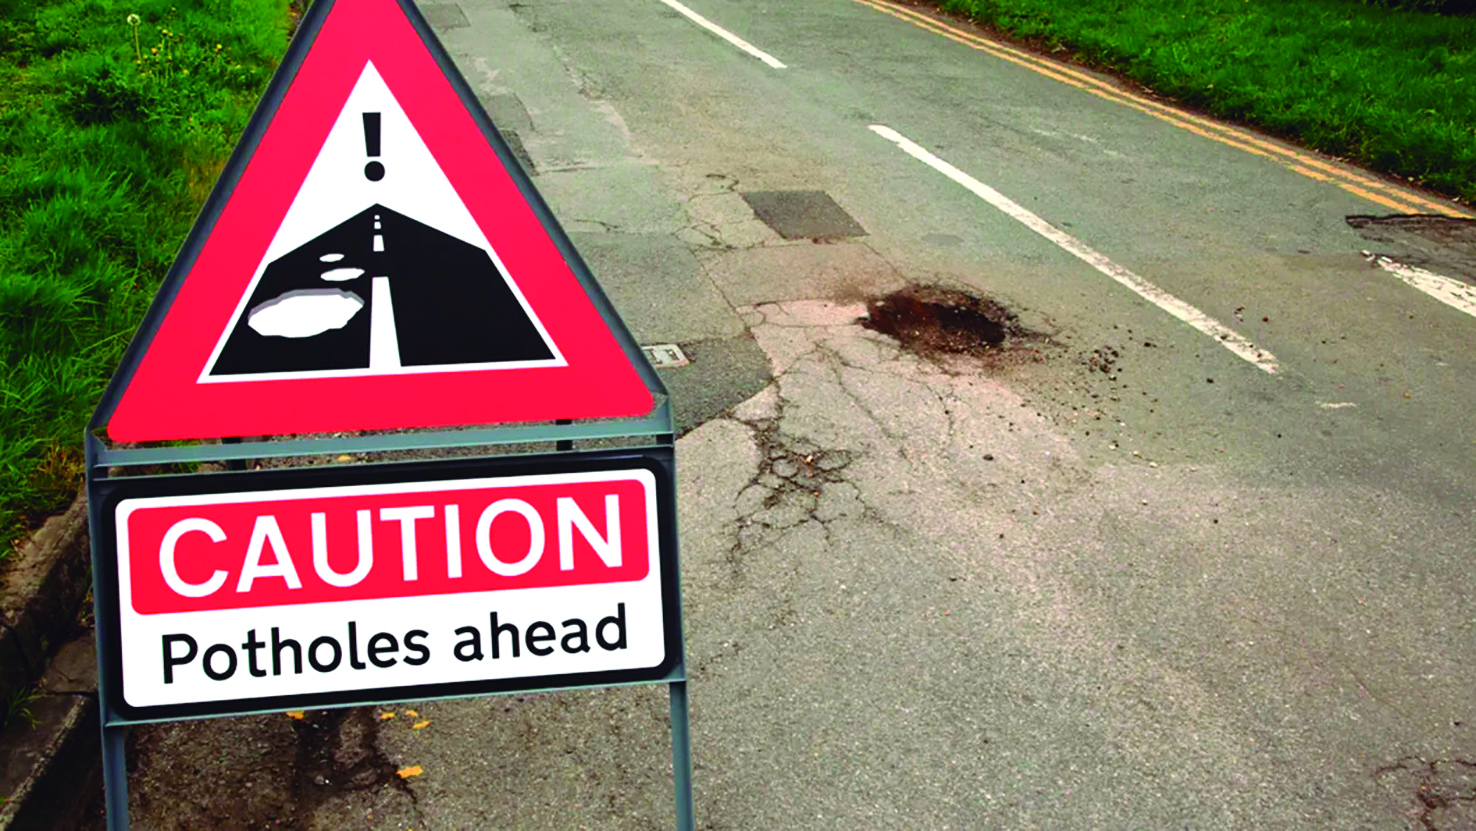 Potholes???  We don’t need no stinkin’ potholes!!